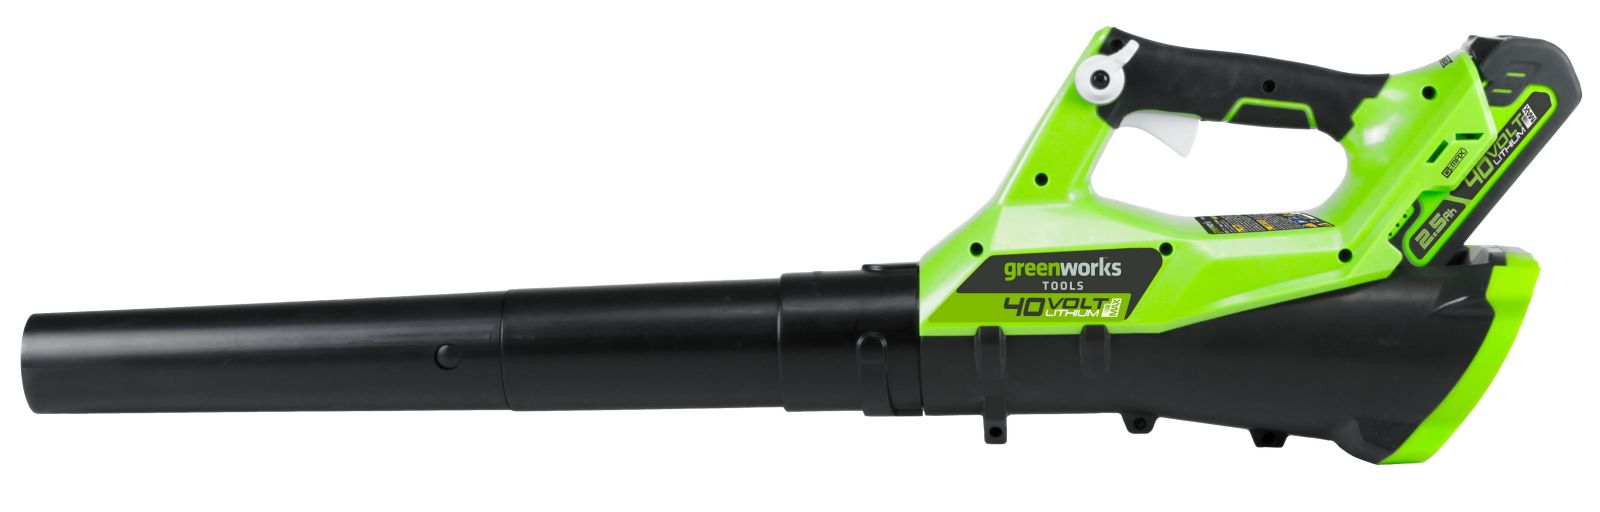 Воздуходувка аккумуляторная GreenWorks G40AB